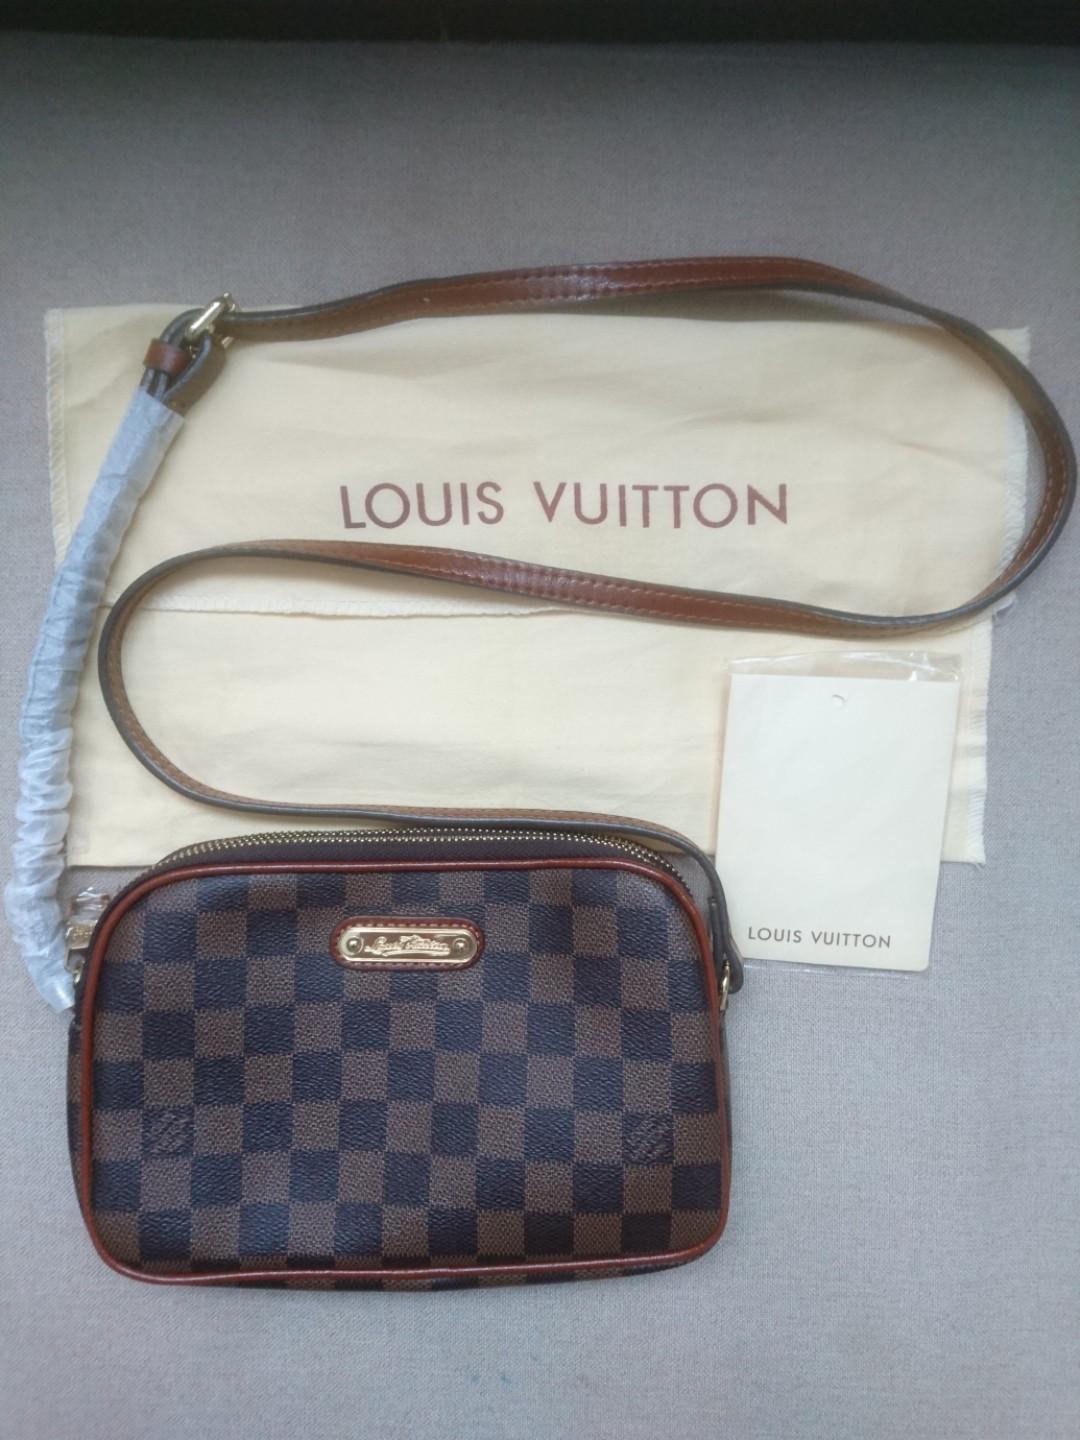 Louis Vuitton Zipper Zipper Pulls For Crafting bags 26 Inches  eBay